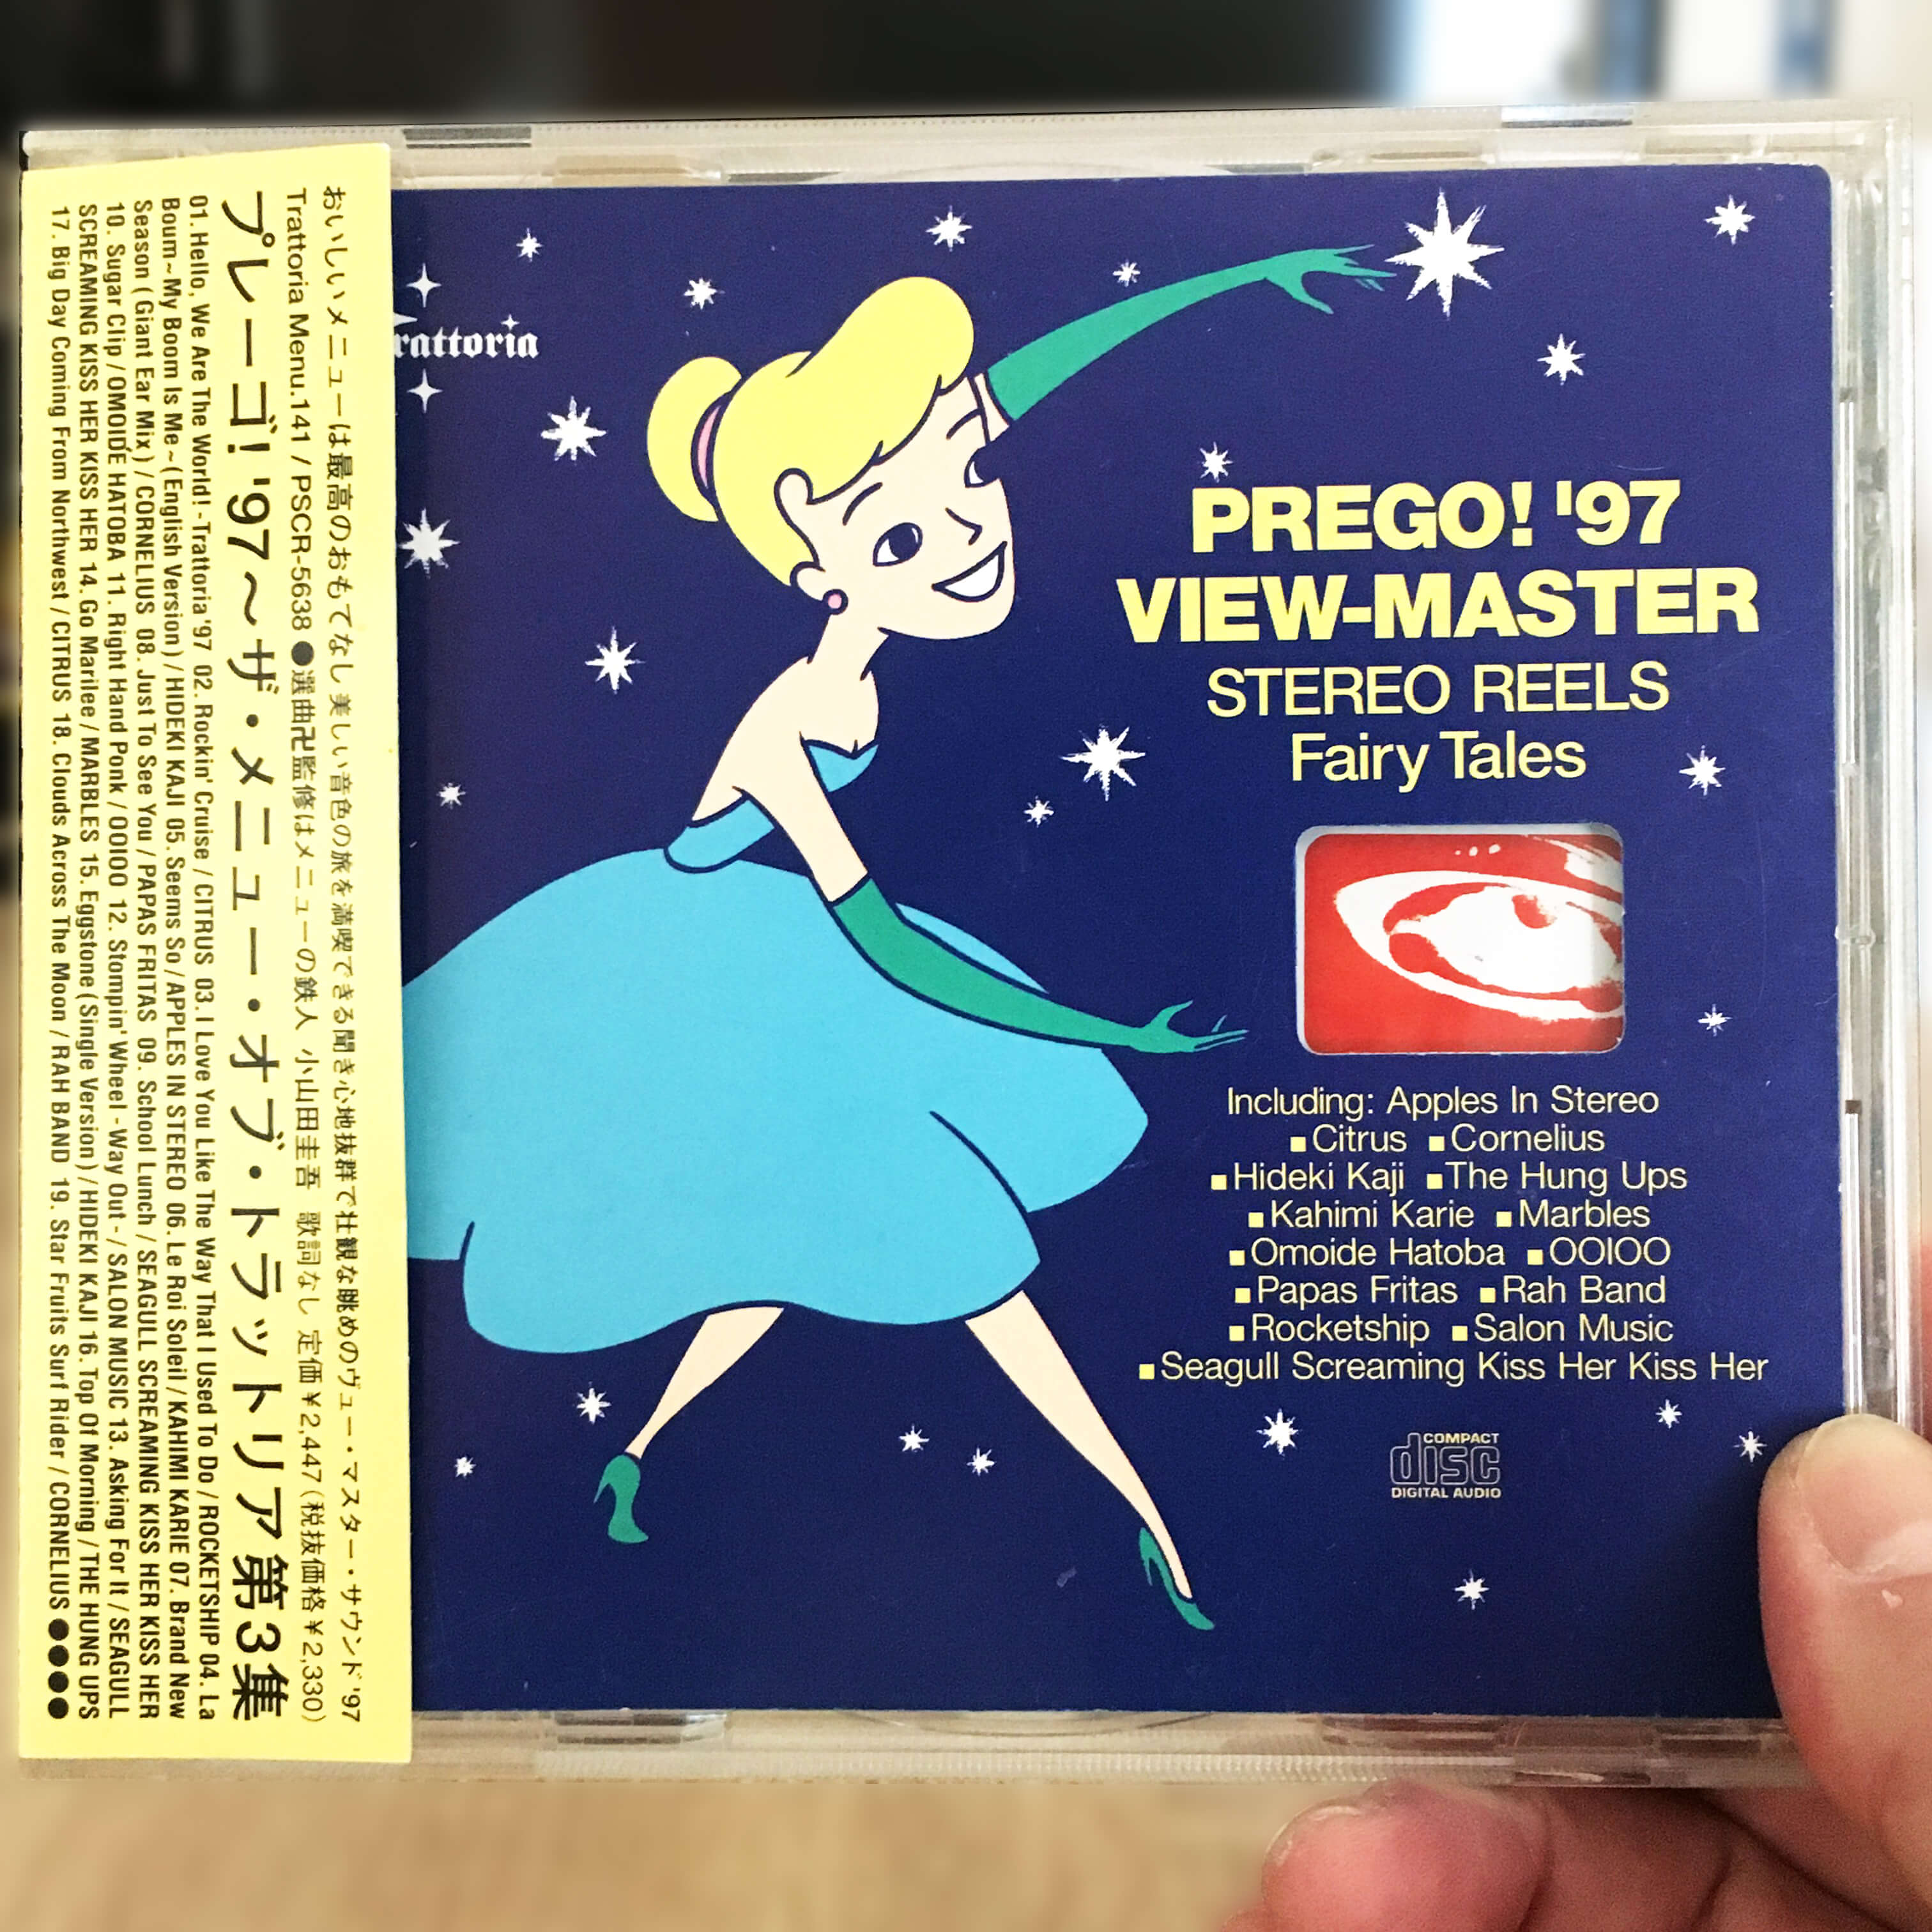 Prego! ’97 View-Master